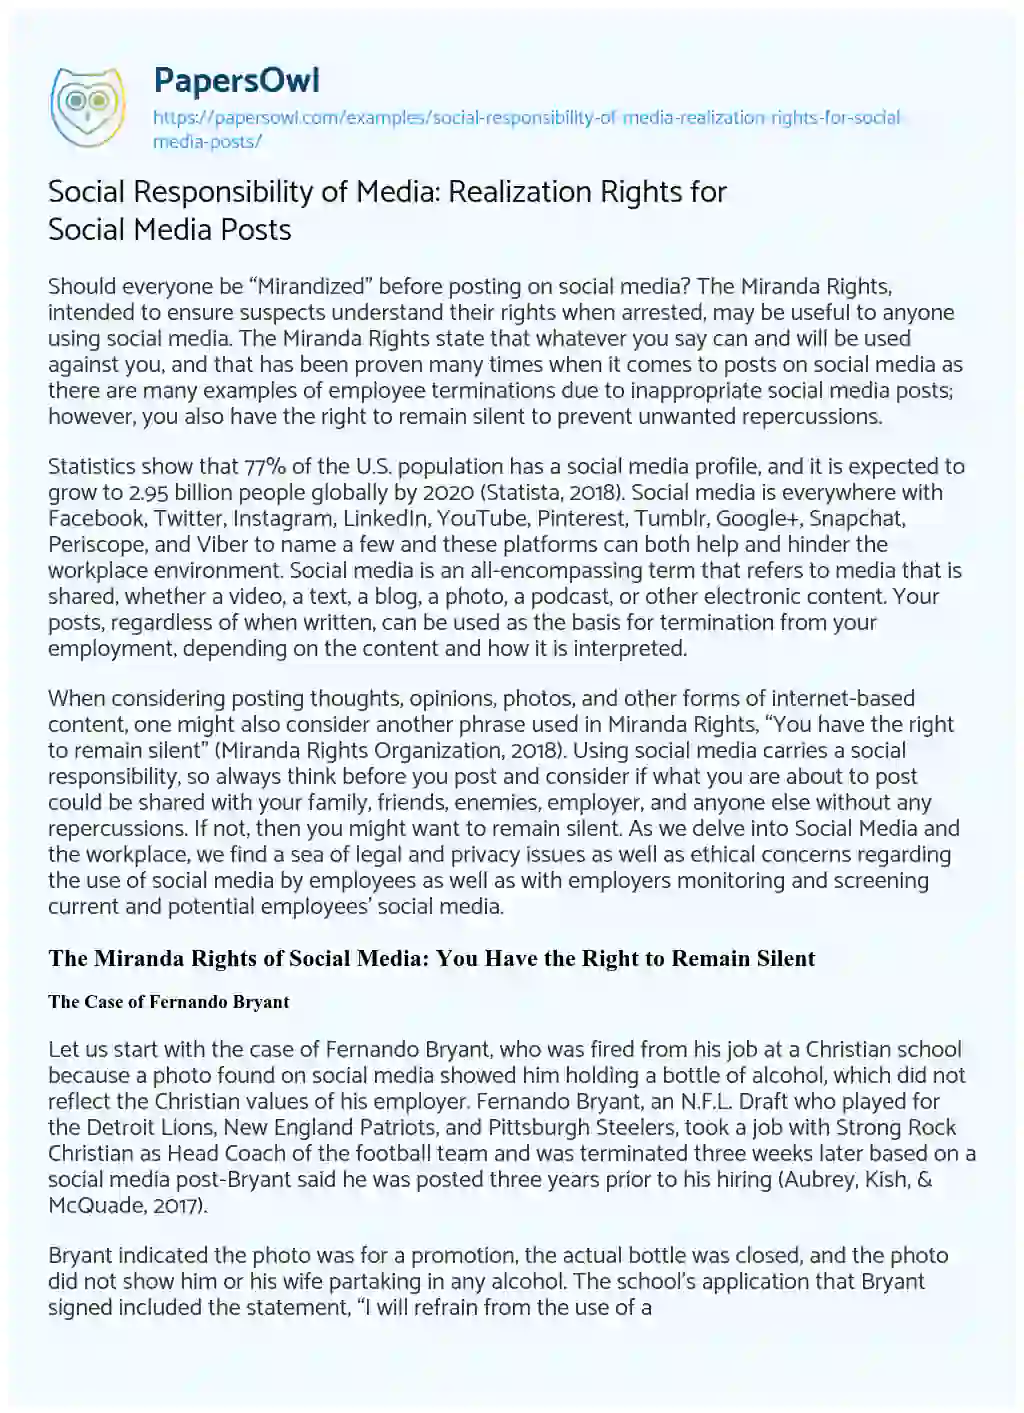 Essay on Social Responsibility of Media: Realization Rights for Social Media Posts